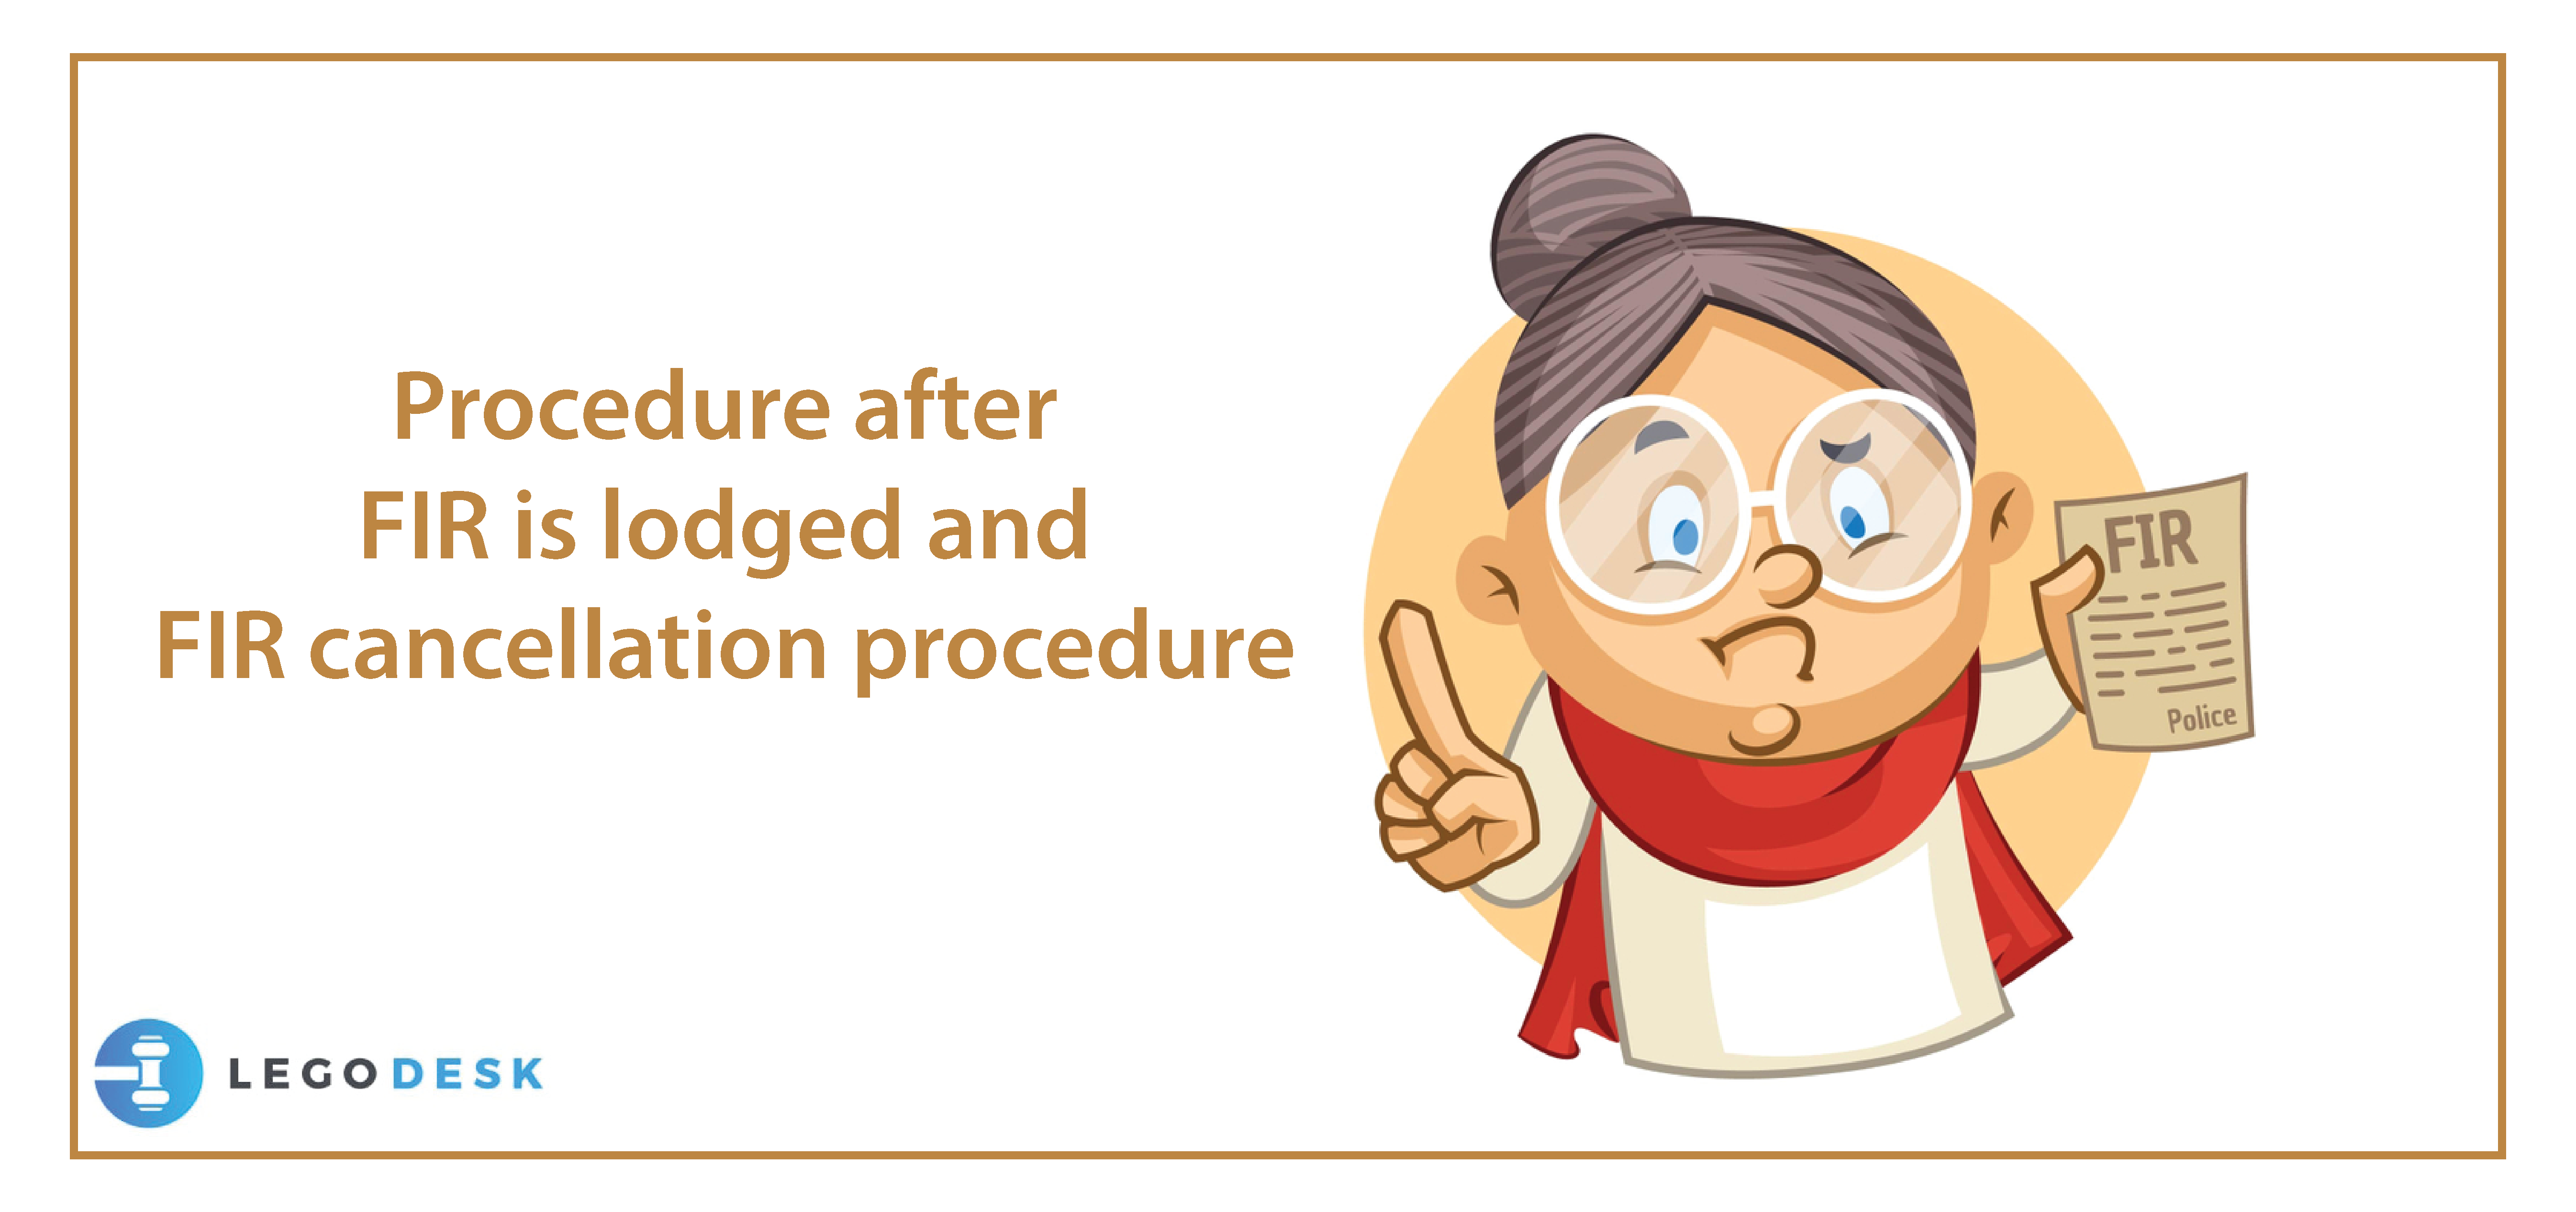 Procedure after FIR is lodged and FIR cancellation procedure